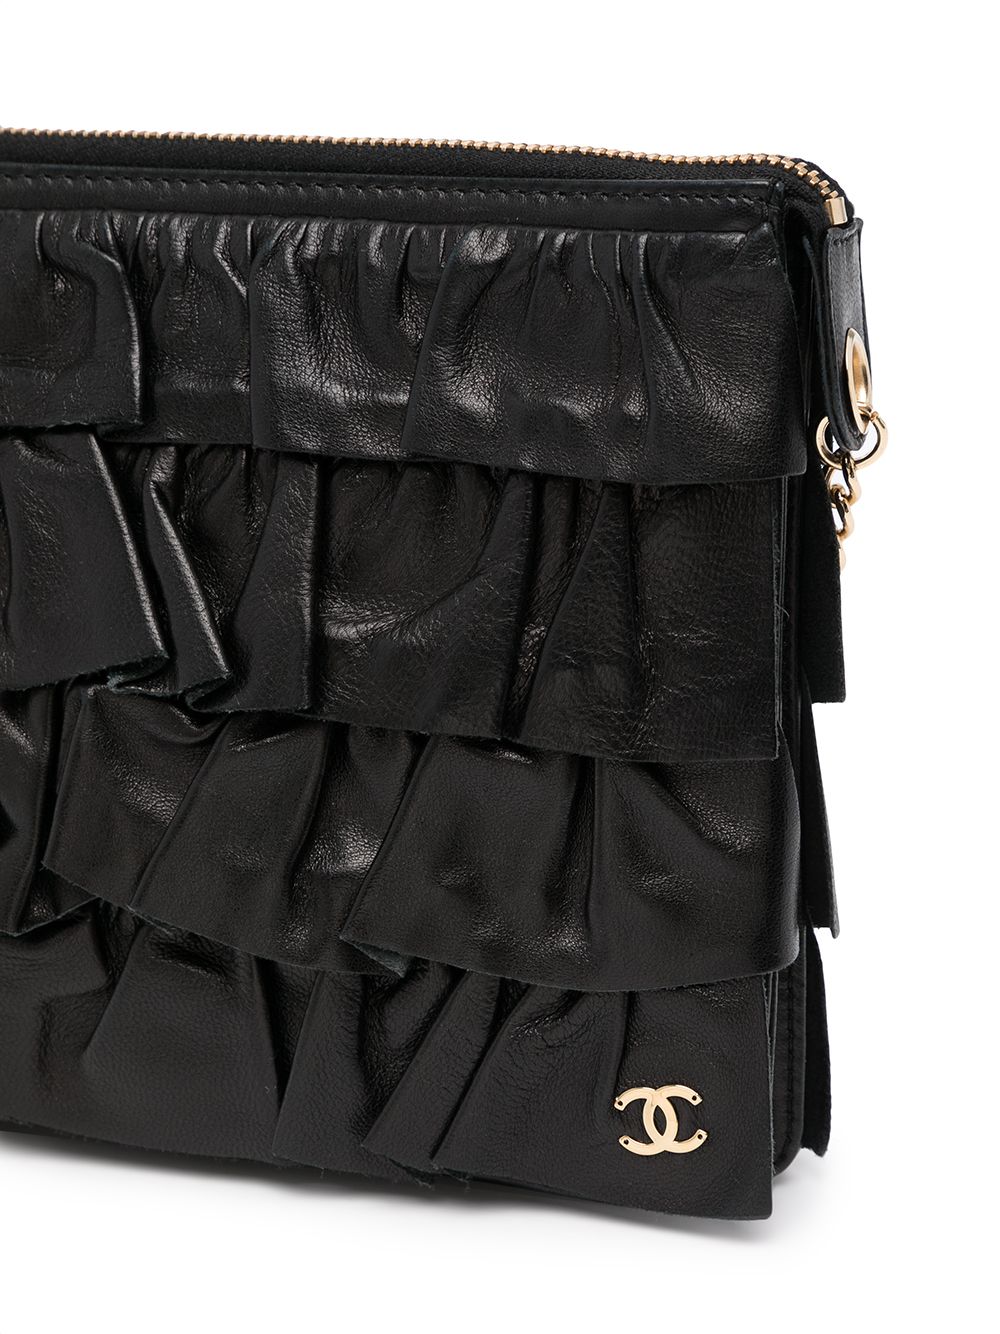 фото Chanel pre-owned сумка 2002-го года с ремнем-цепочкой и сборками